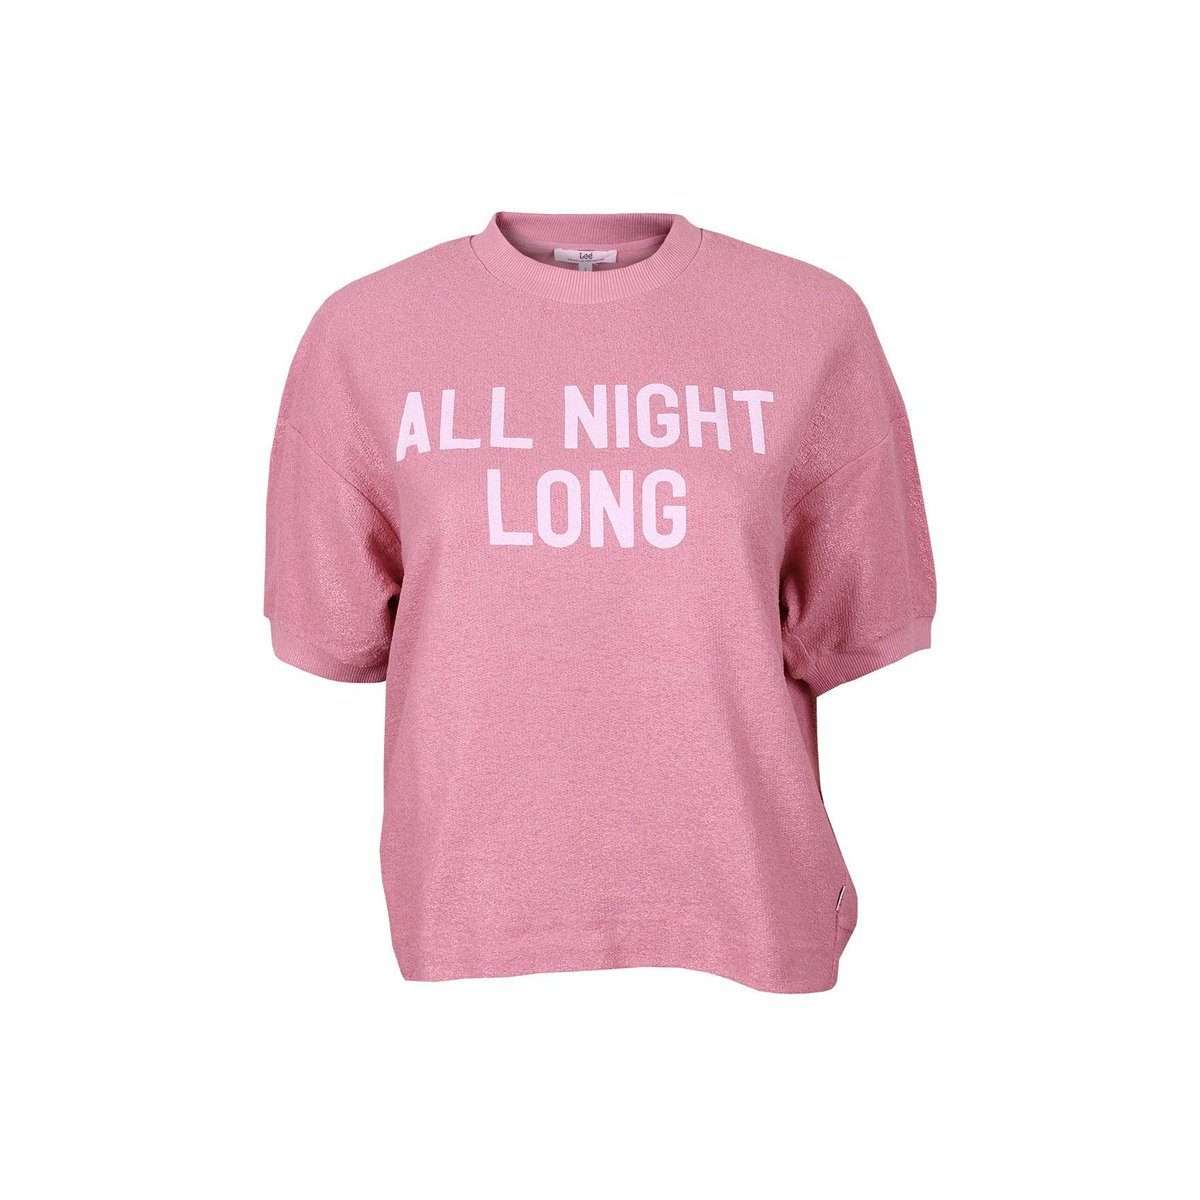 Lee® Sweater Lee All Night Long Sweater с короткими рукавами женский свитшот пуловер розовый